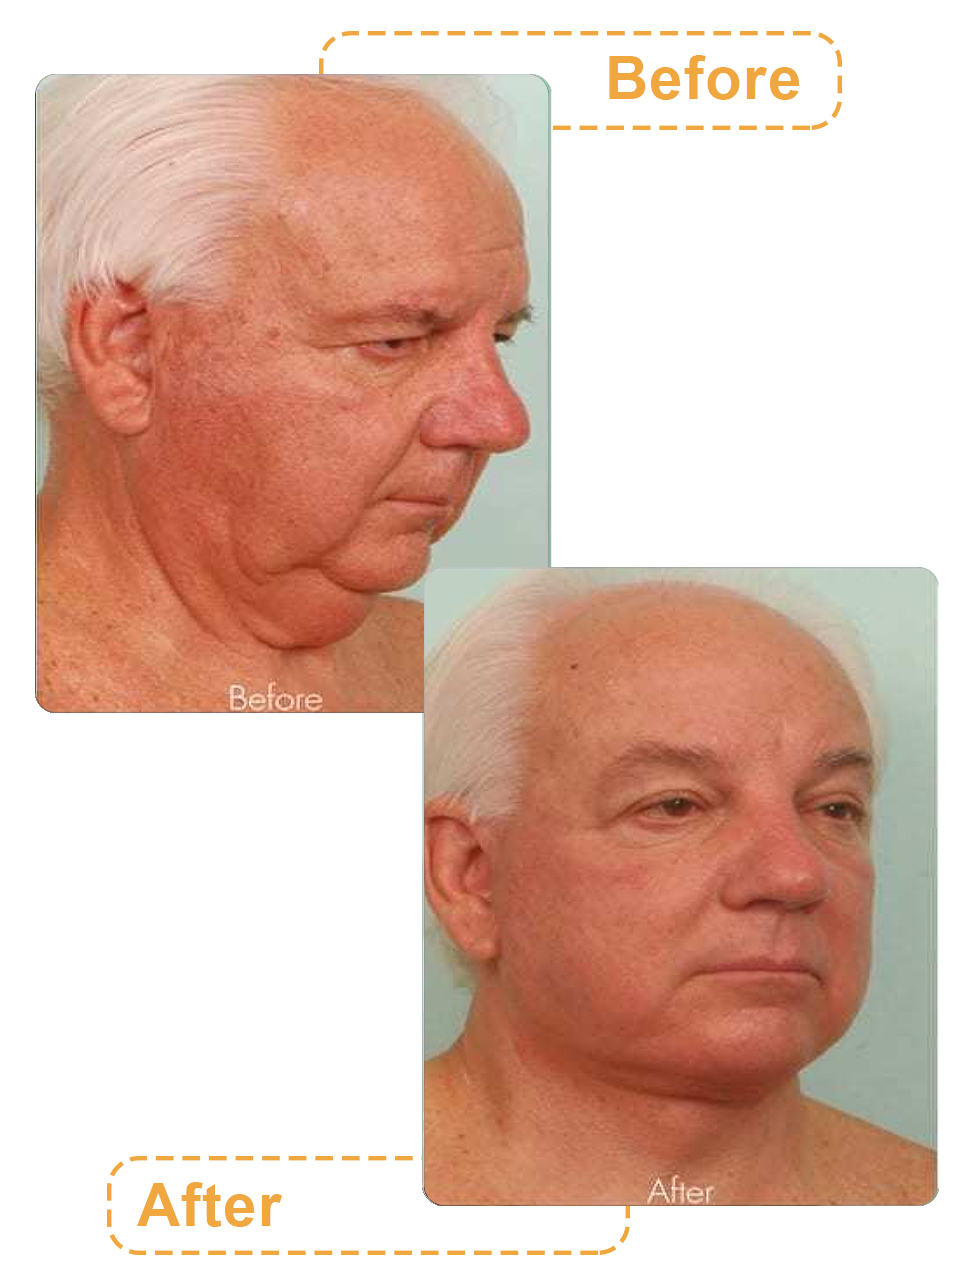 عکس قبل و بعد جراحی زیبایی صورت آقایان